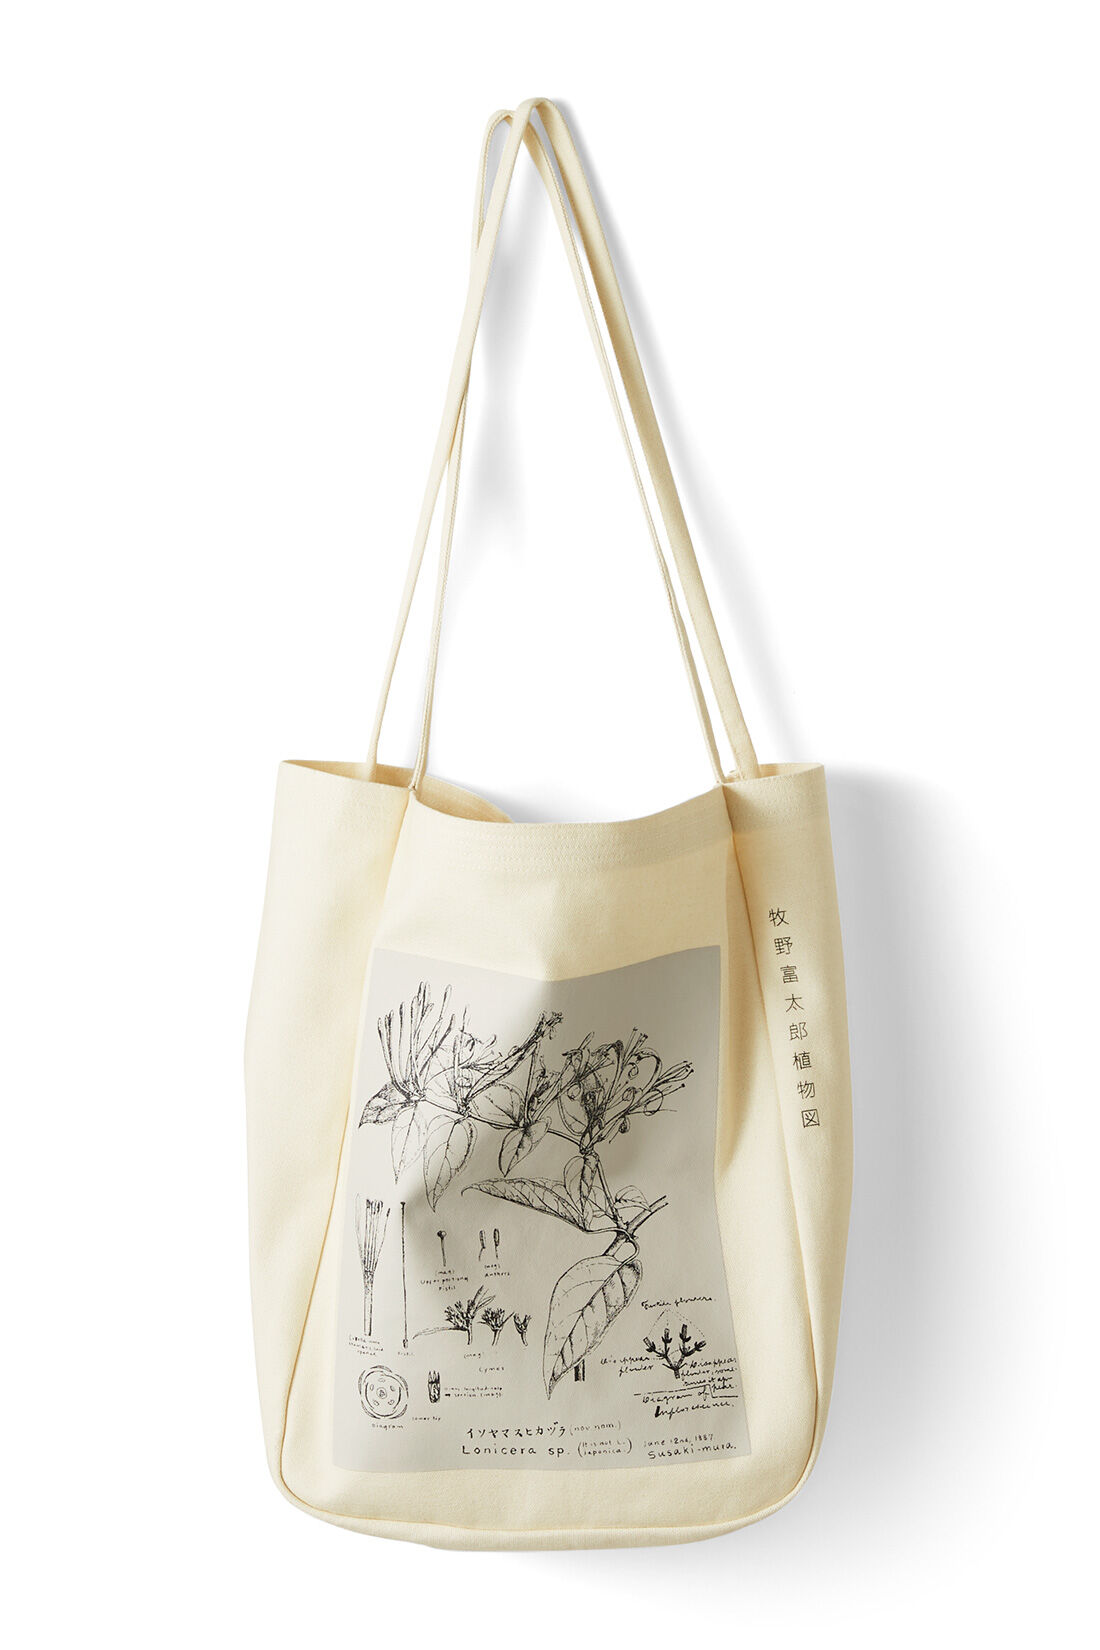 IEDIT|牧野植物園×IEDIT[イディット]コラボ 牧野博士の描いたキダチニンドウのトートバッグ〈エクリュホワイト〉|〈エクリュホワイト〉